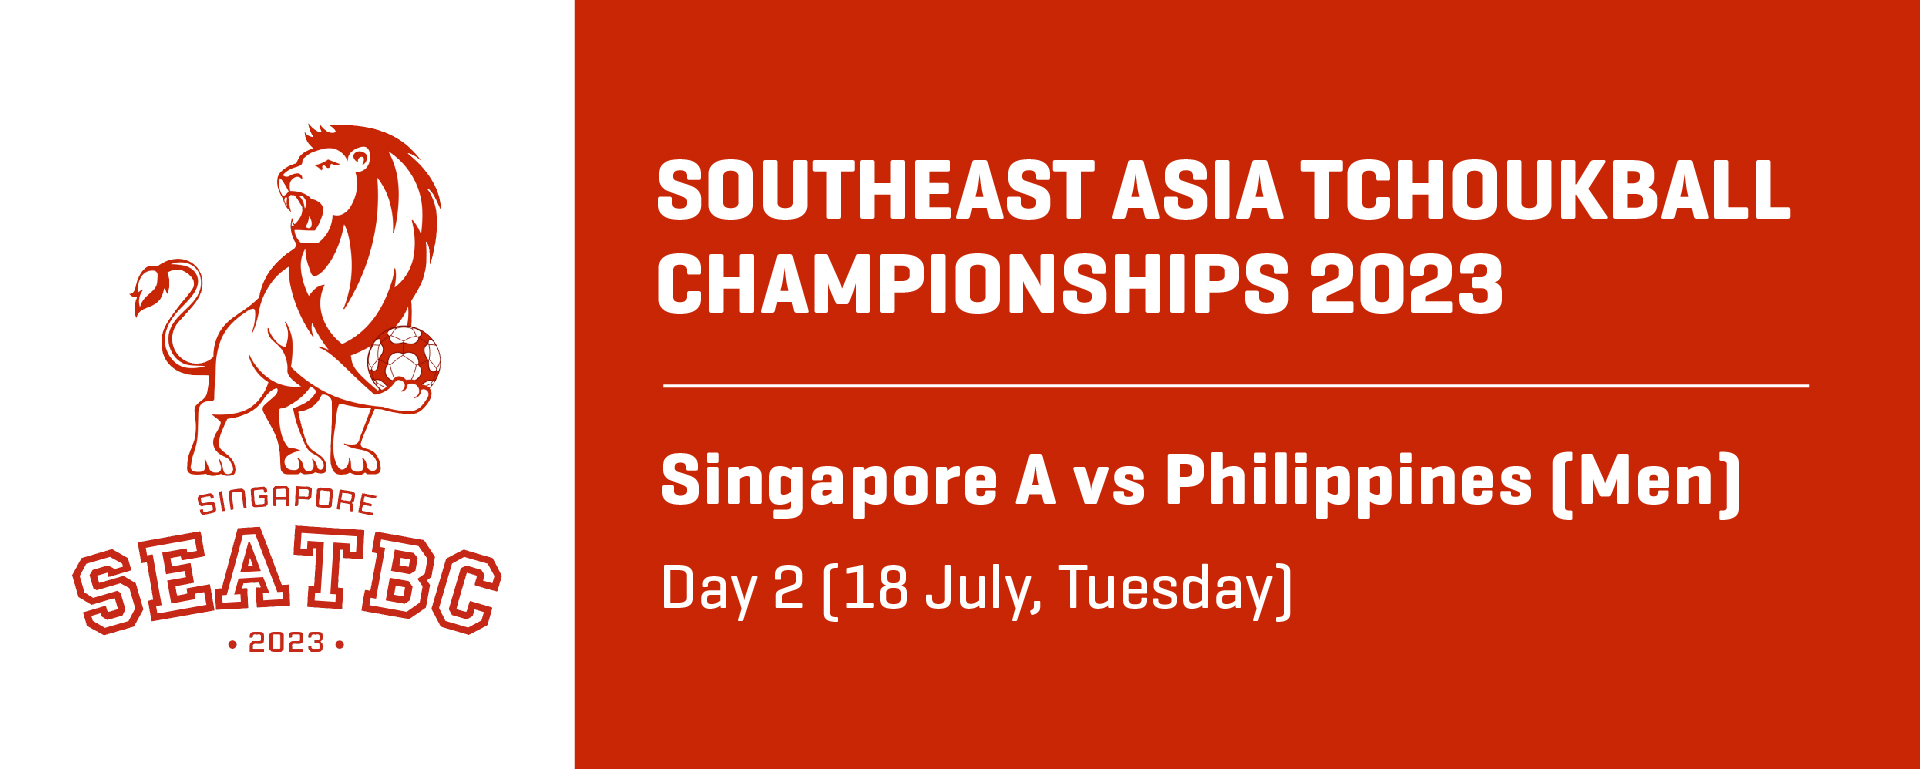 Southeast Asia Tchoukball Championships 2023 | Men | Singapore A vs Philippines